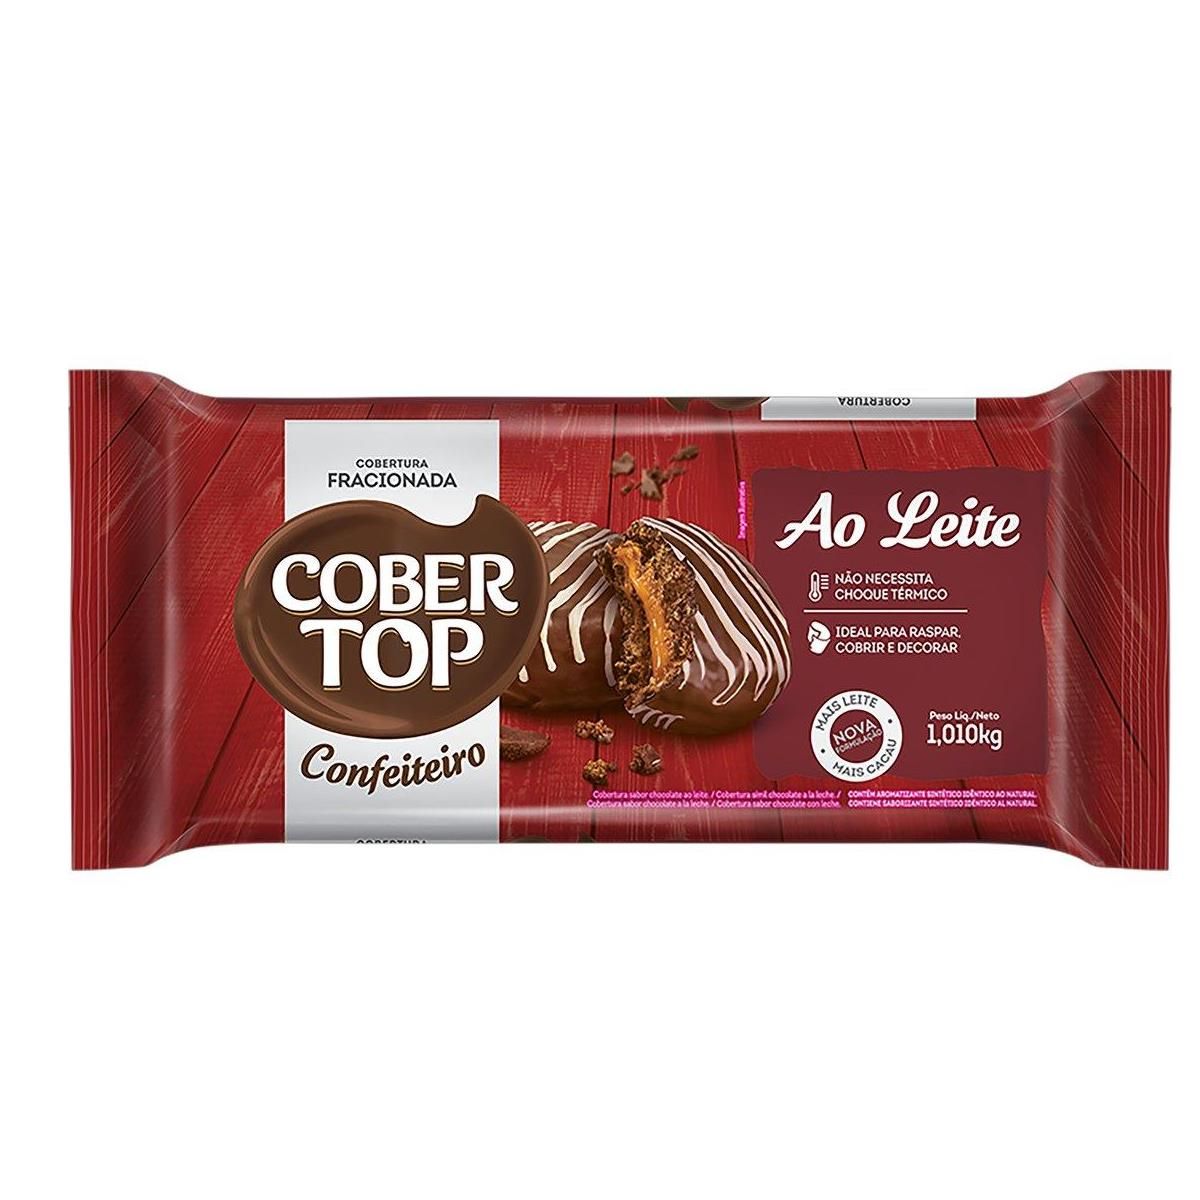 Barra para Cobertura Cober Top Chocolate ao Leite 1,010kg image number 0